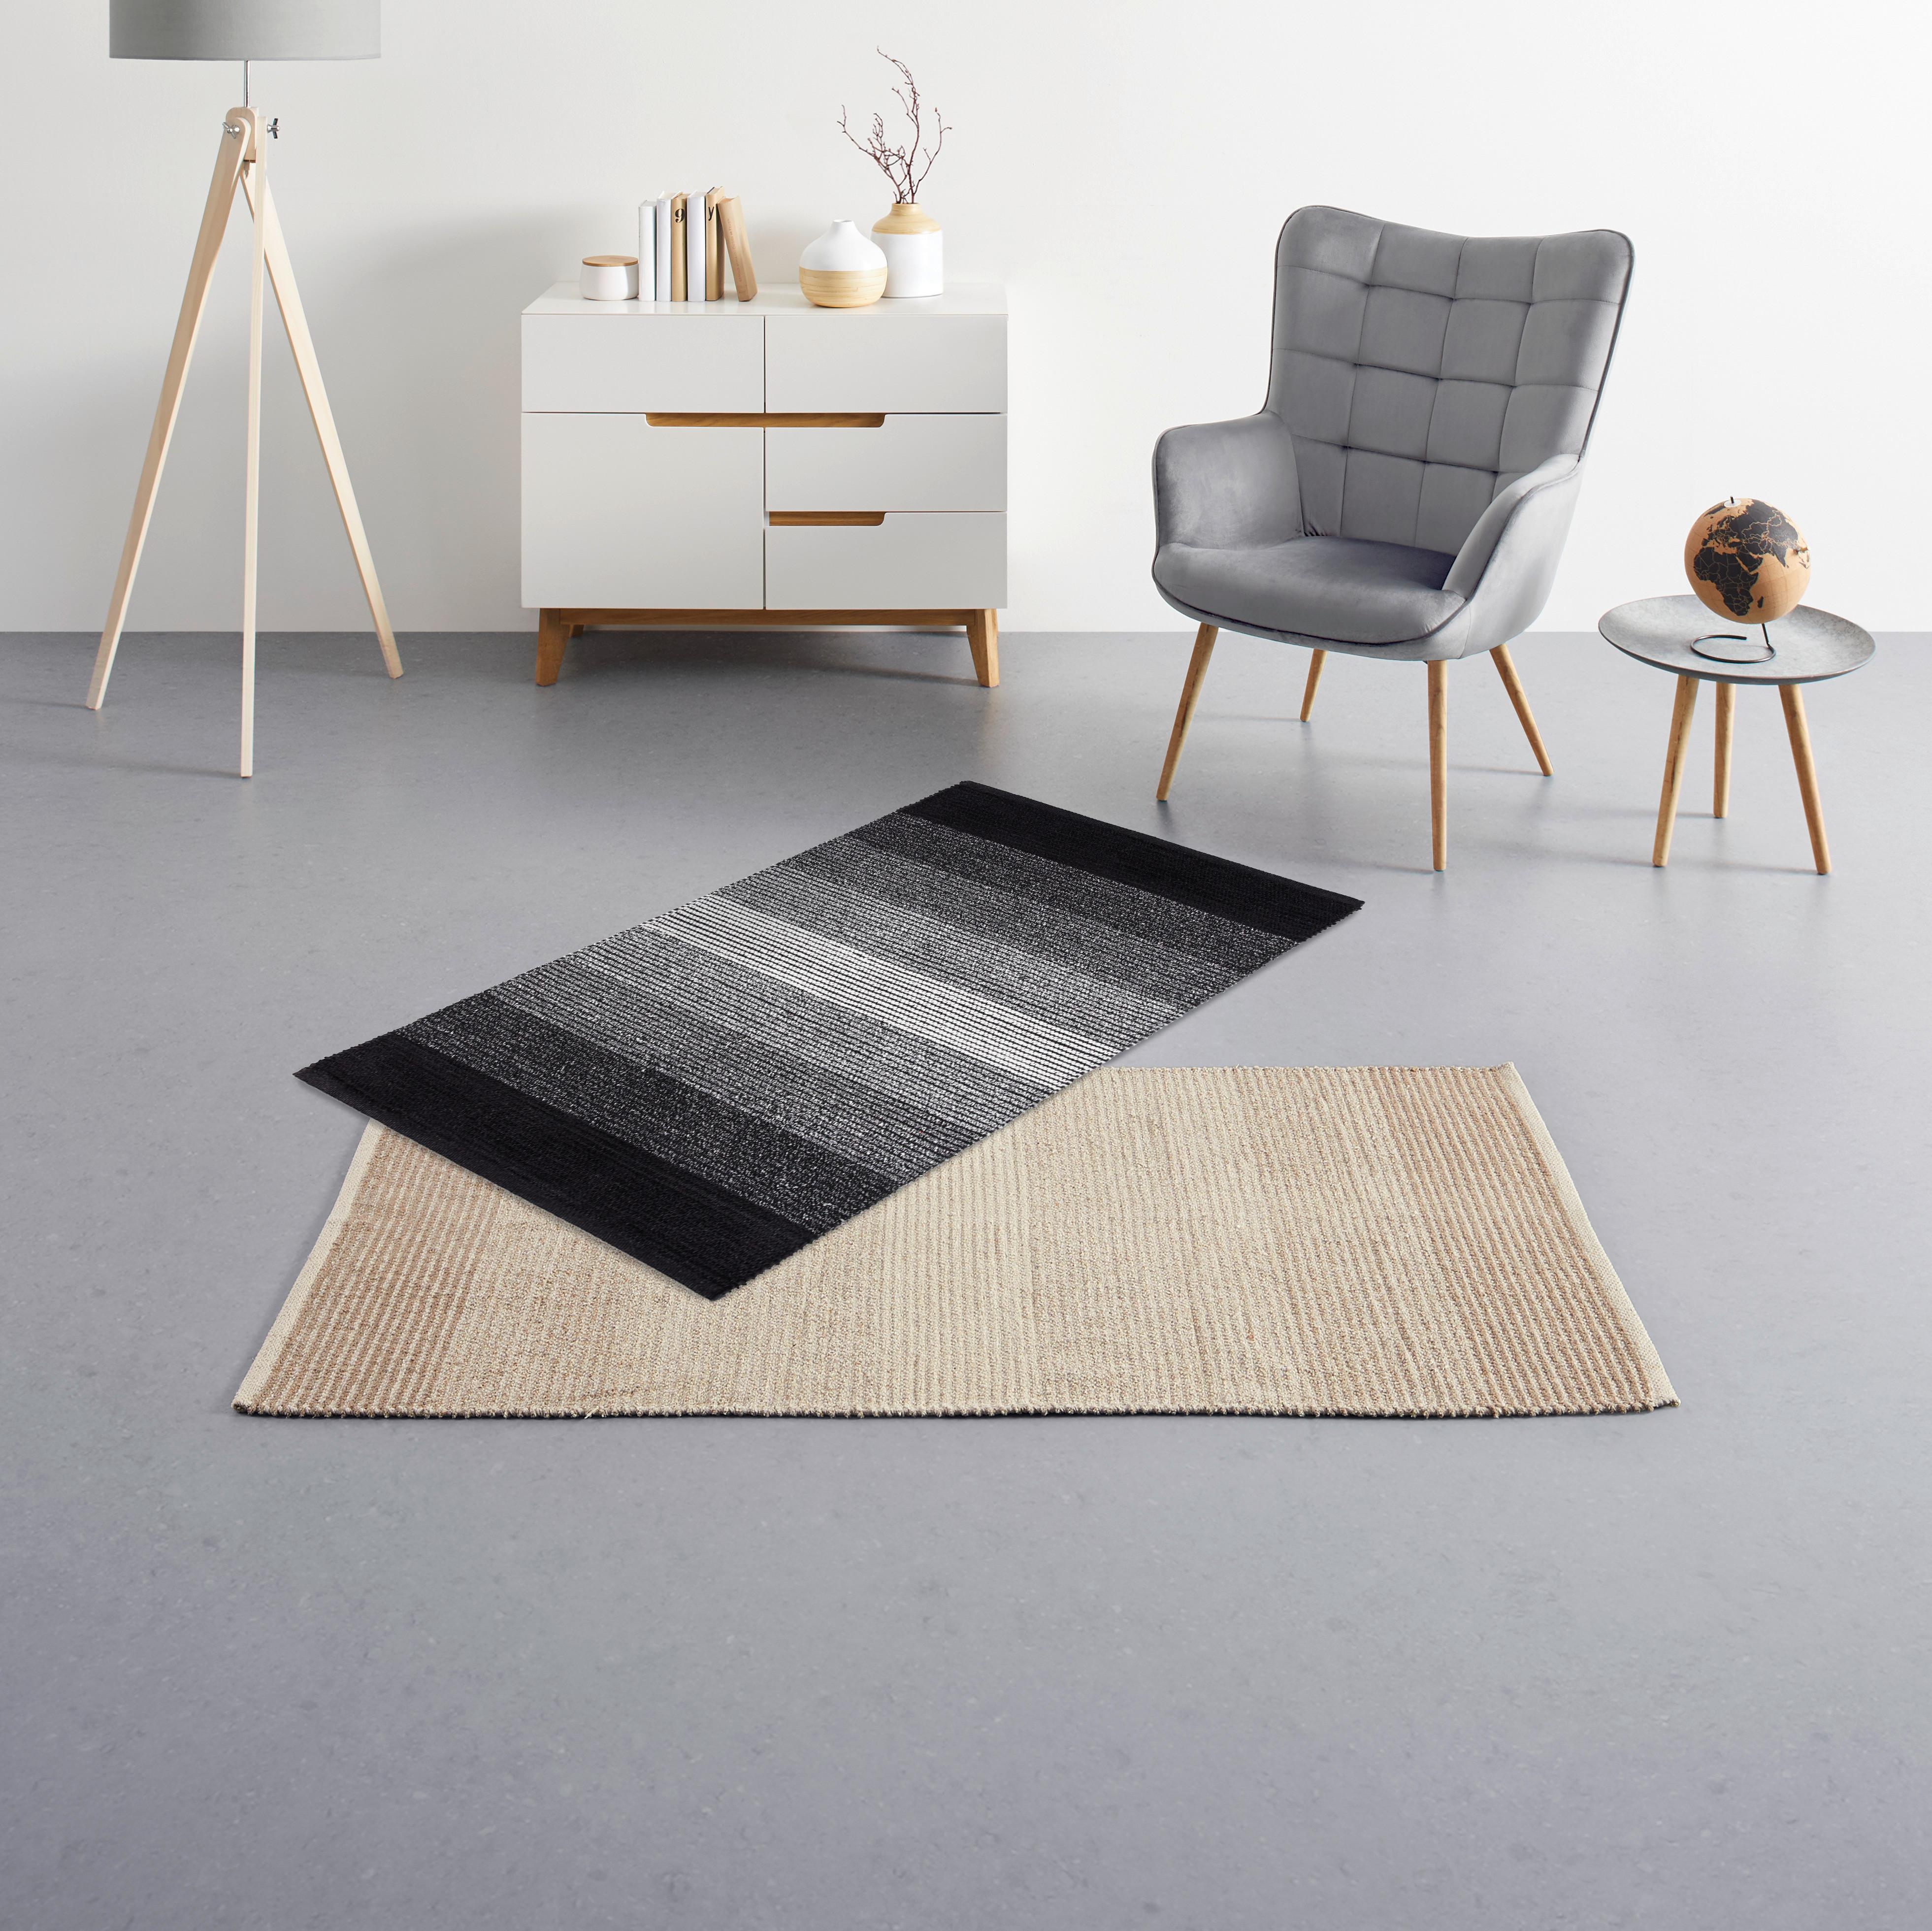 Hadrový Koberec Malto - černá, Moderní, textil (70/140cm) - Modern Living